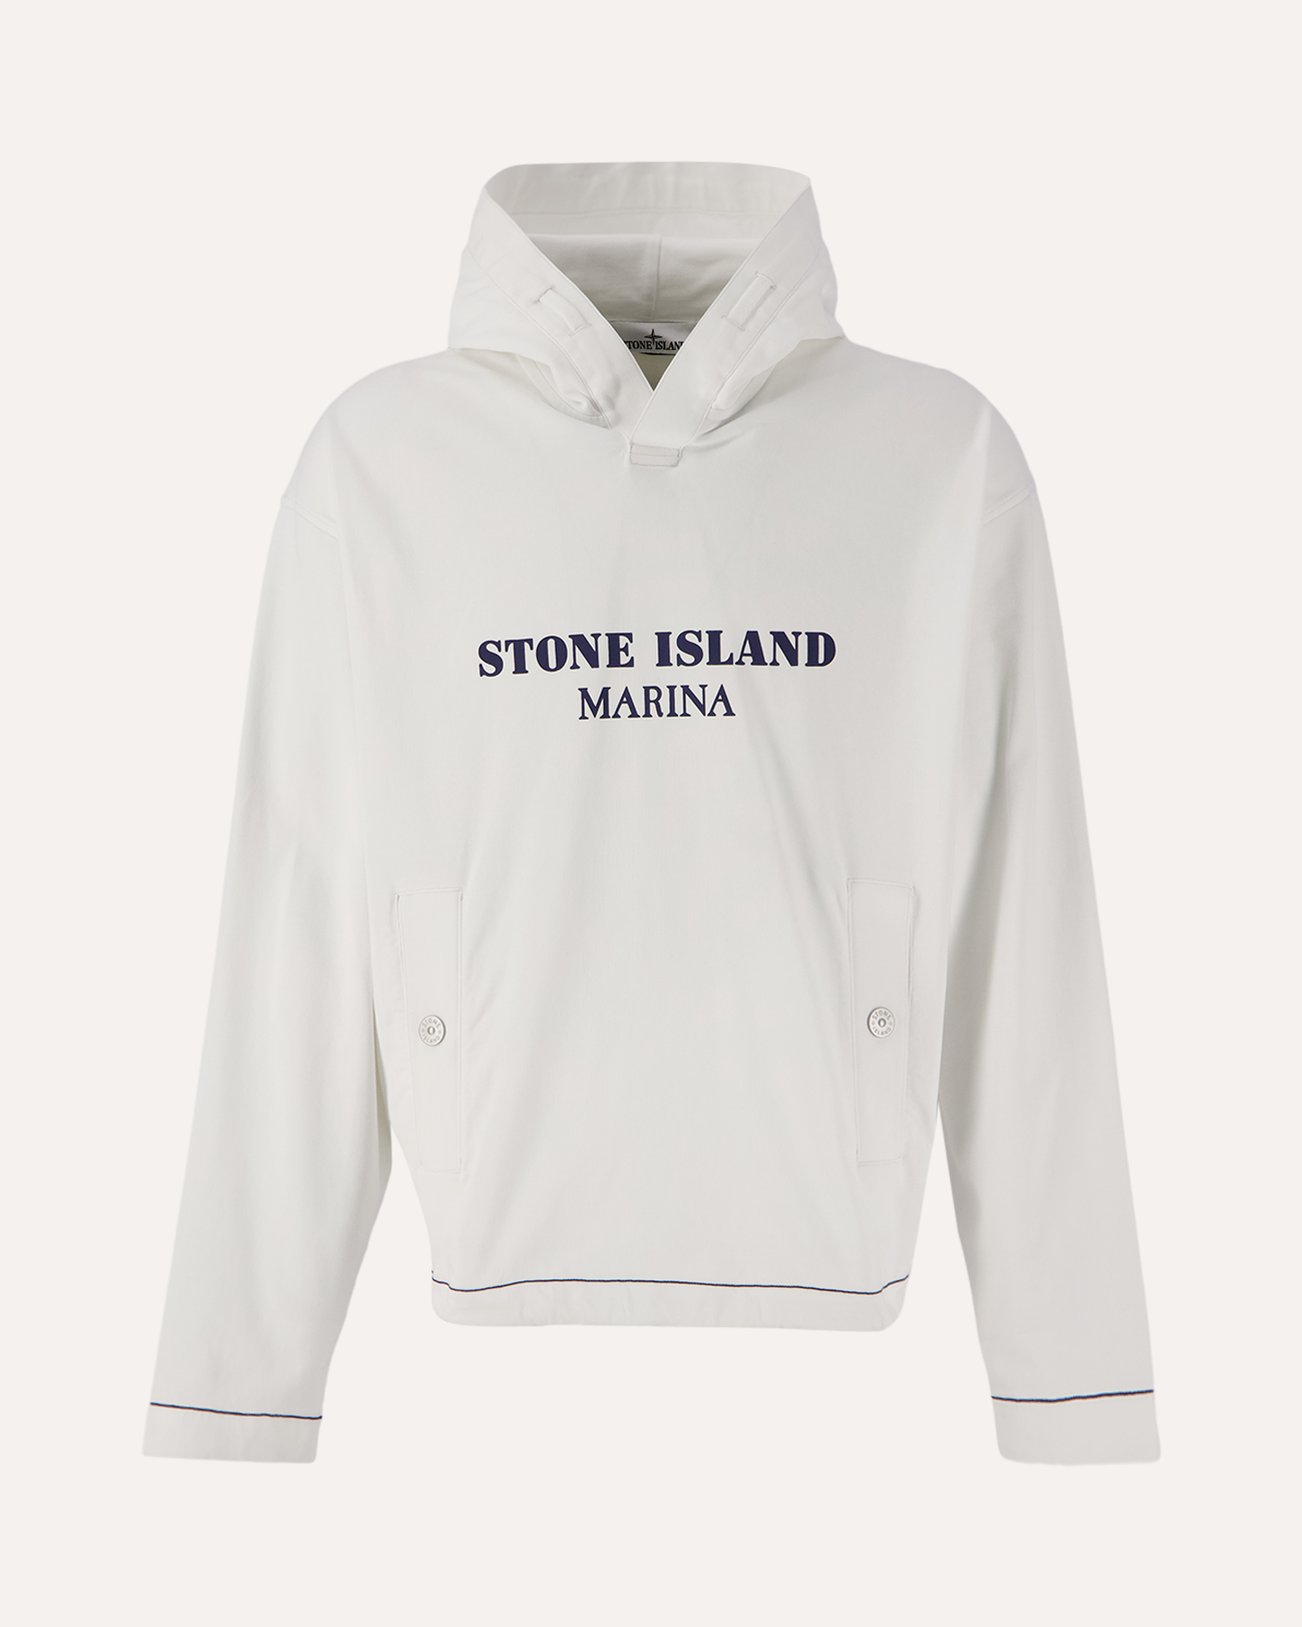 Stone Island 614X2 Stone Island Marina - Heavy Cotton Jersey Garment Dyed 'Old' Effect Hooded Sweatshirt WIT 1